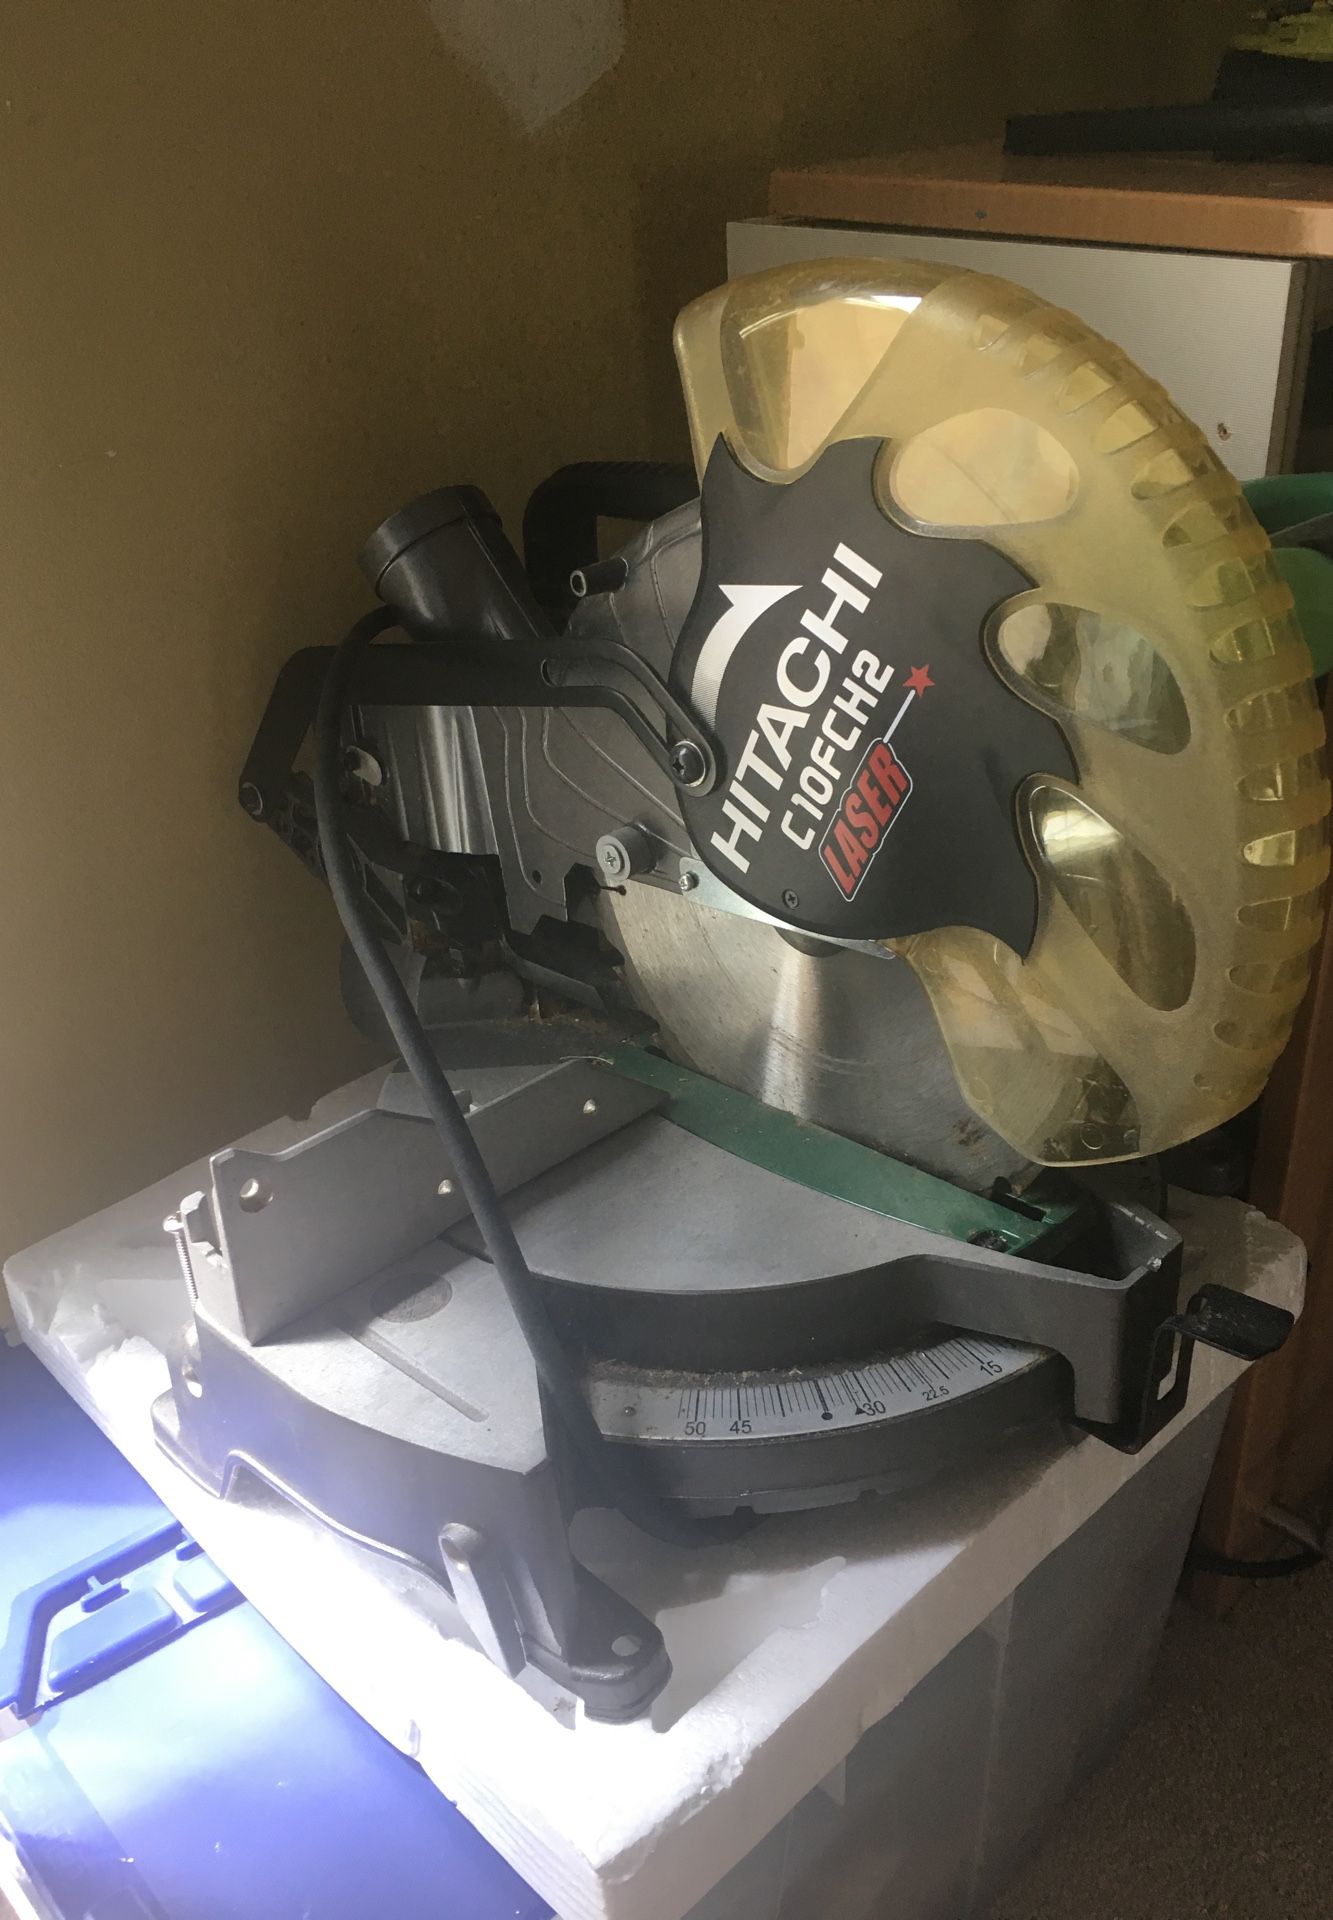 Hitachi 10” compound miter saw